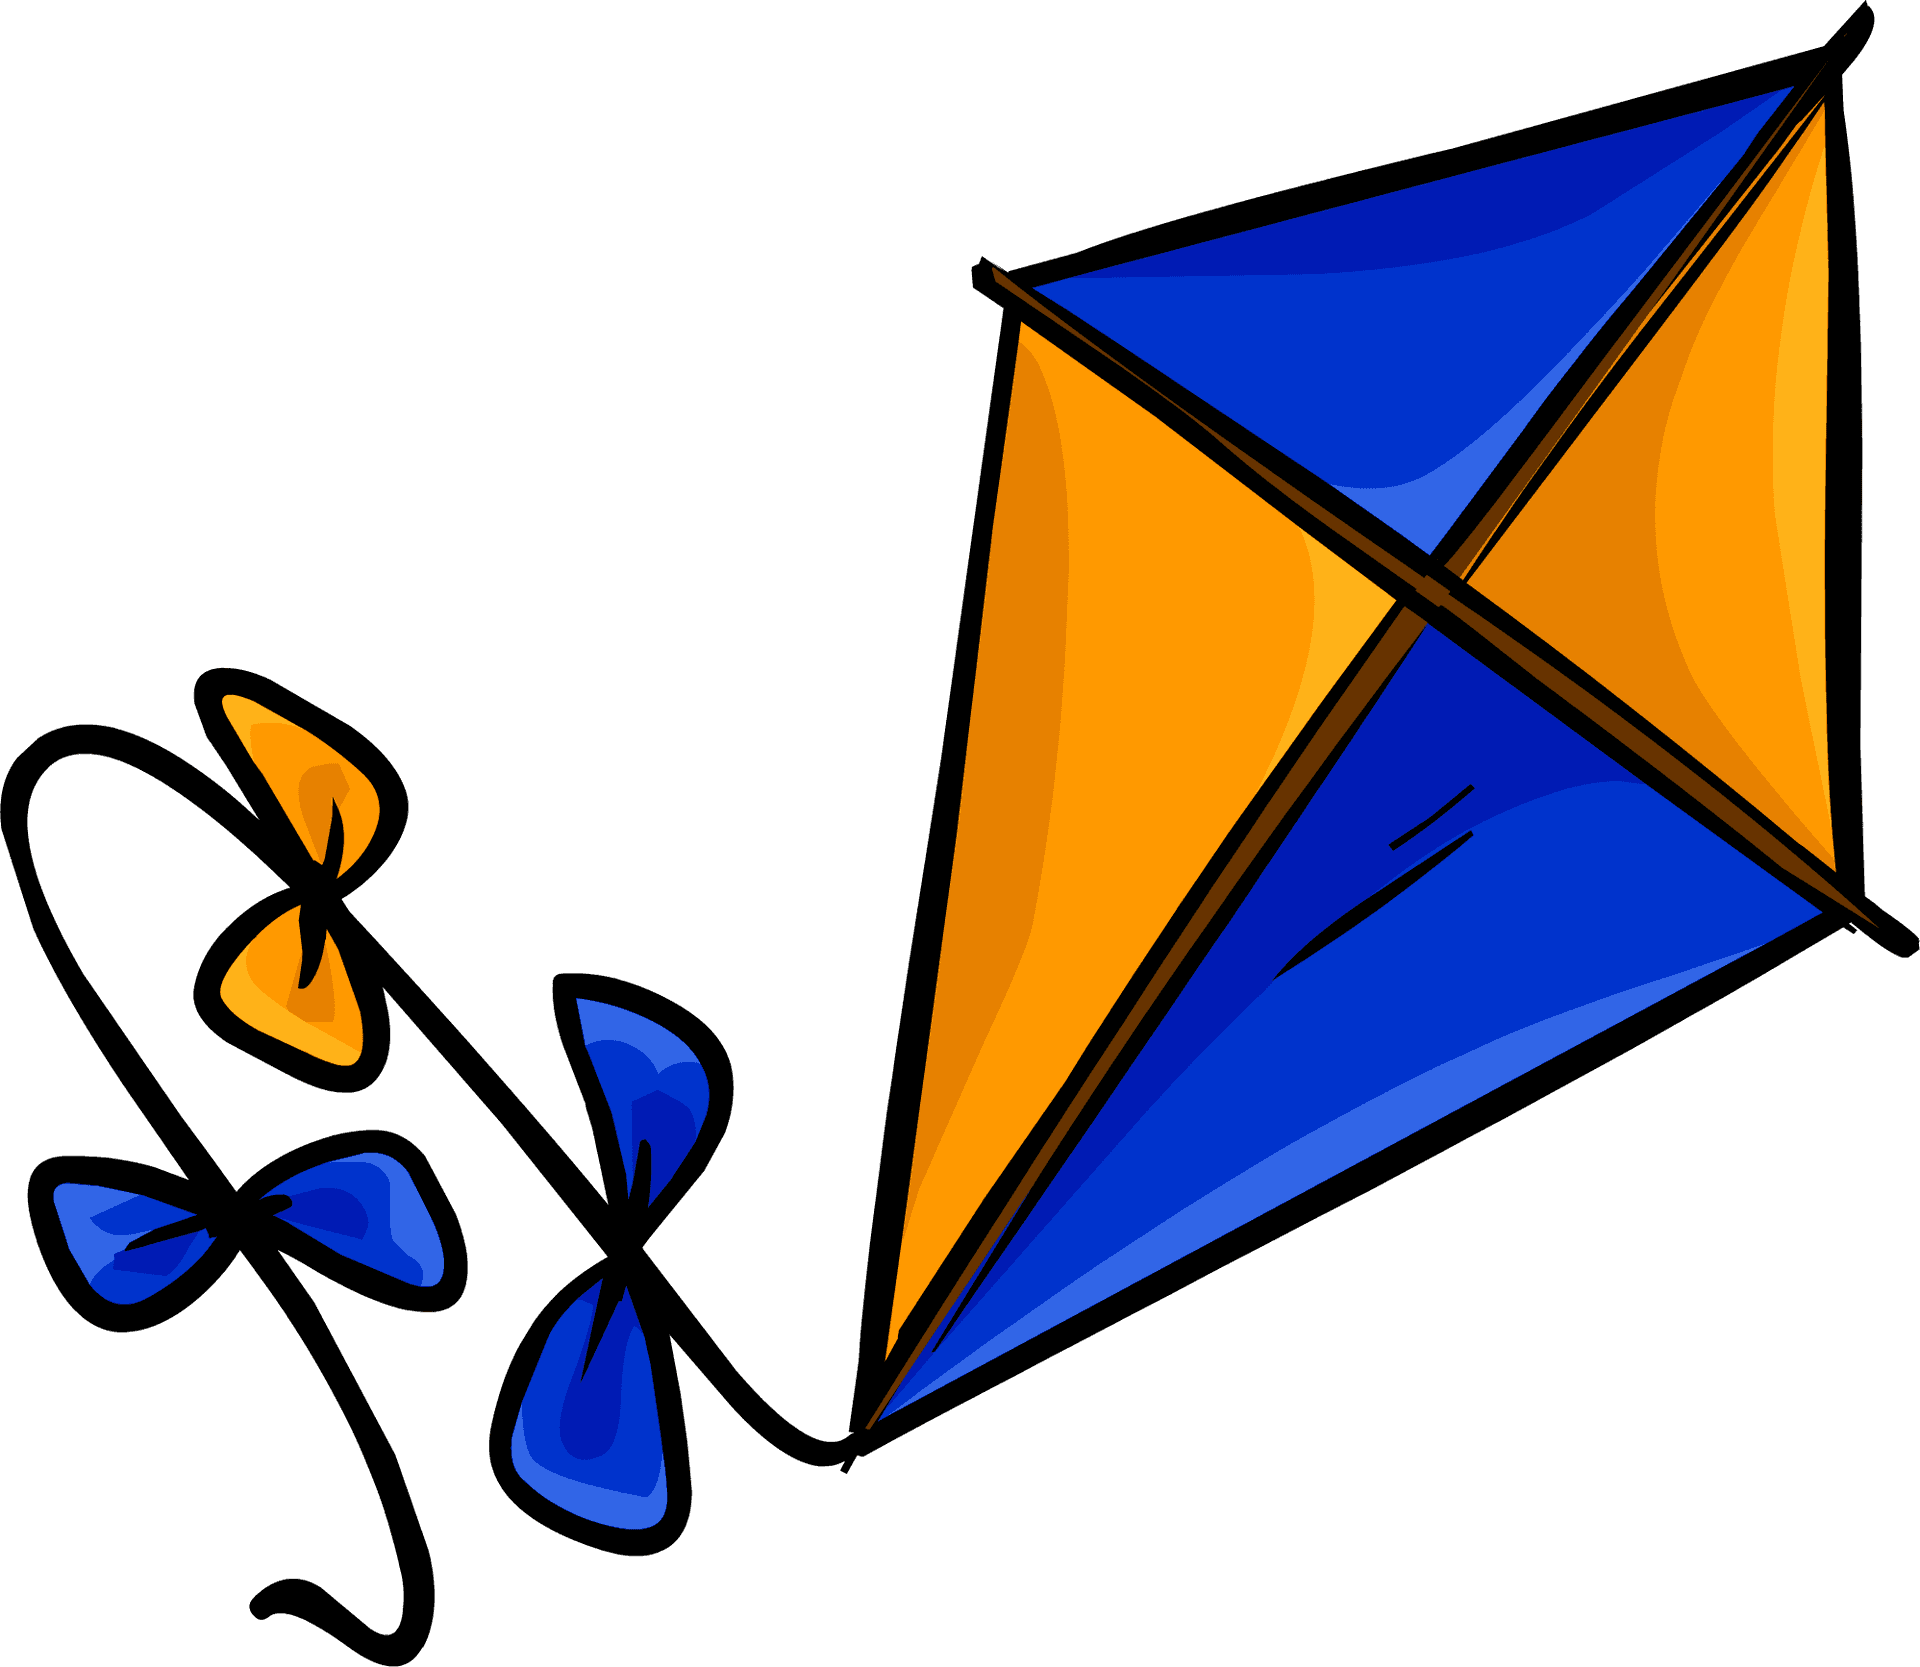 Colorful Kite Illustration PNG image